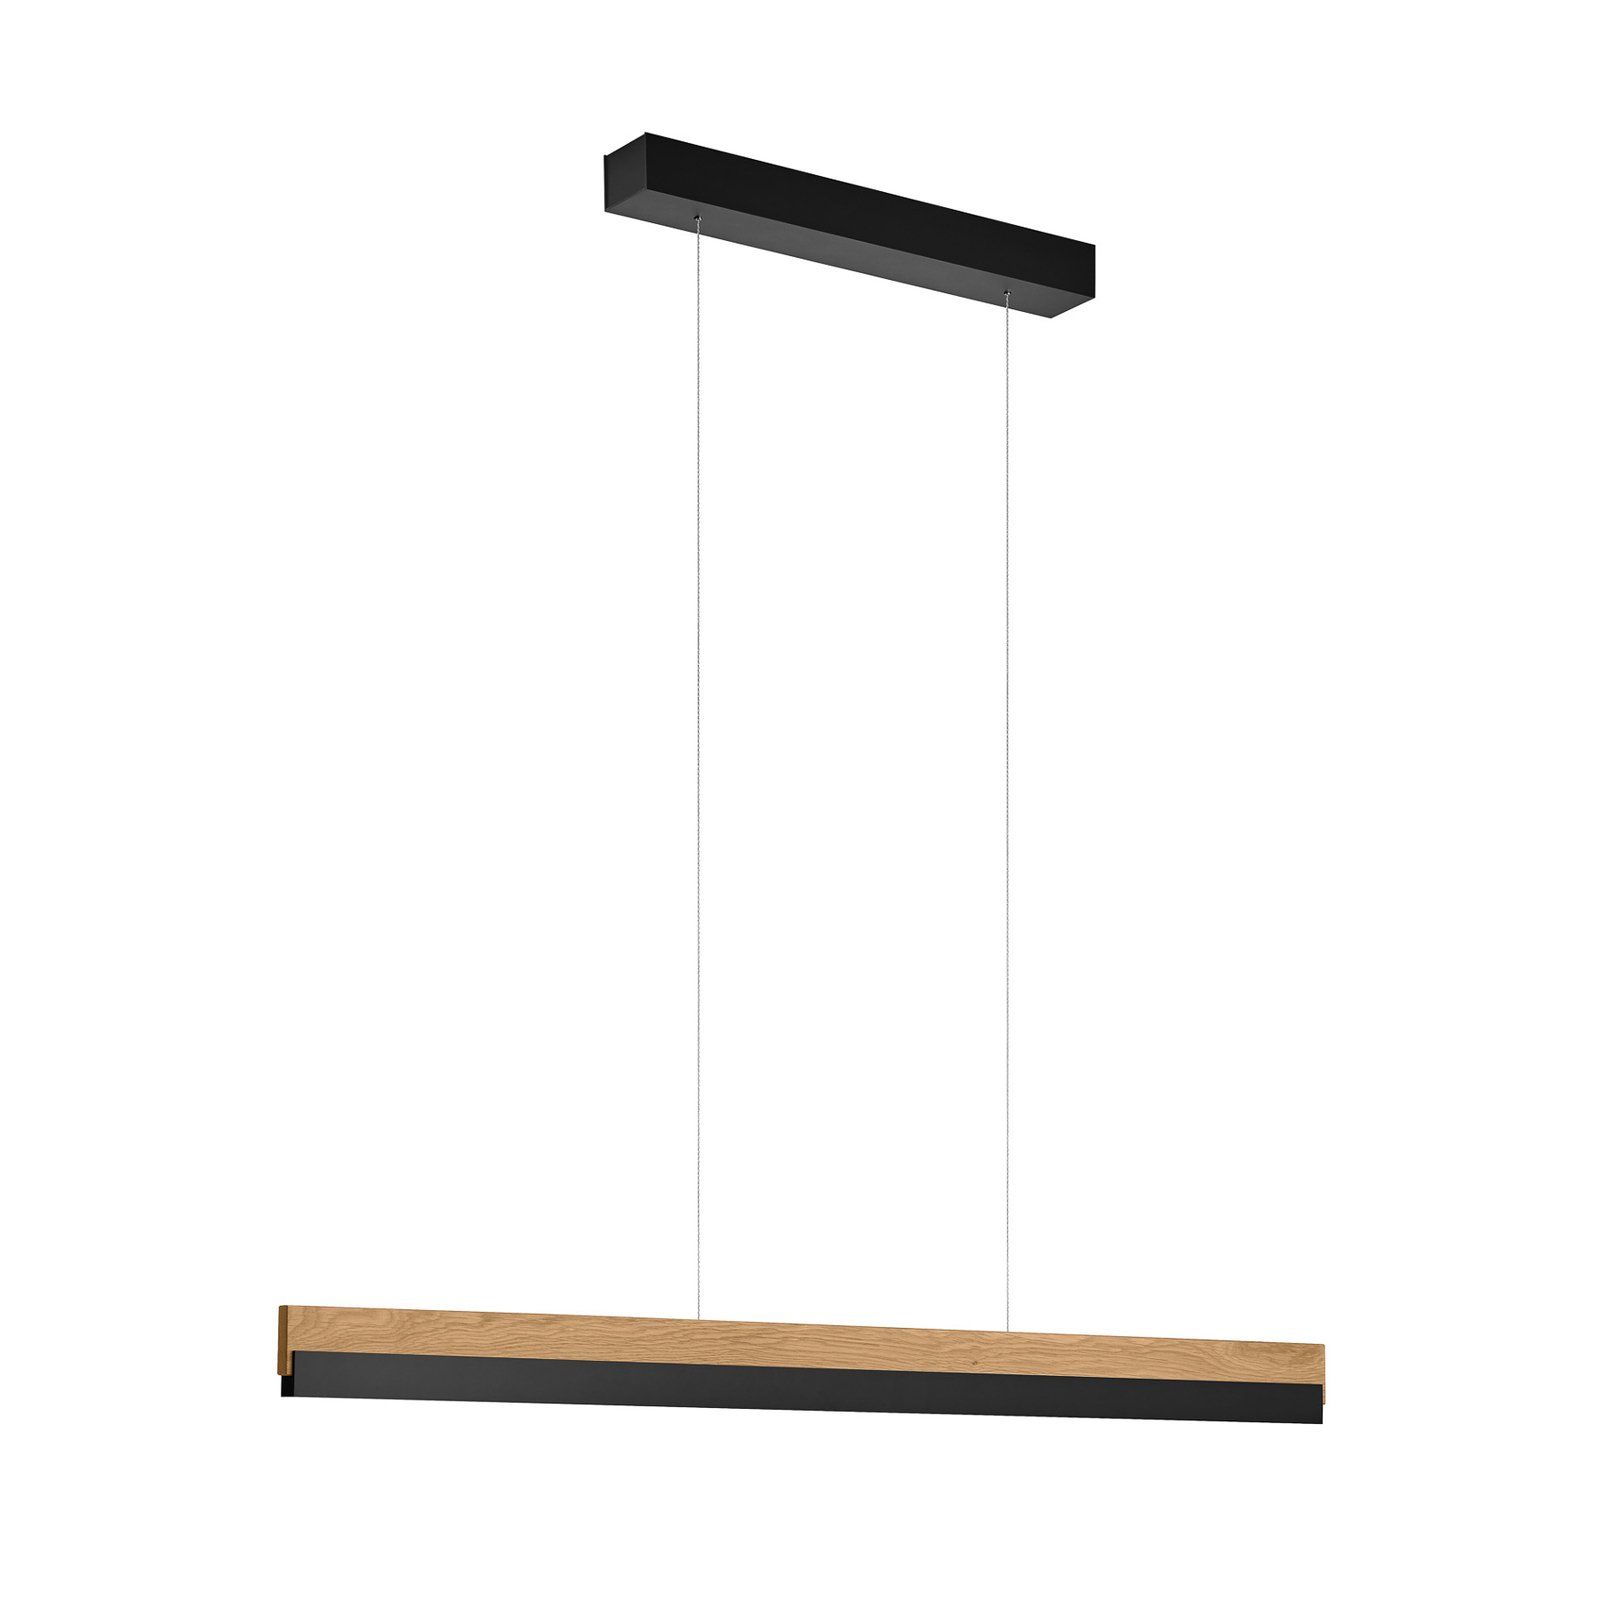 Quitani hanglamp Keijo, zwart/eiken, 103 cm